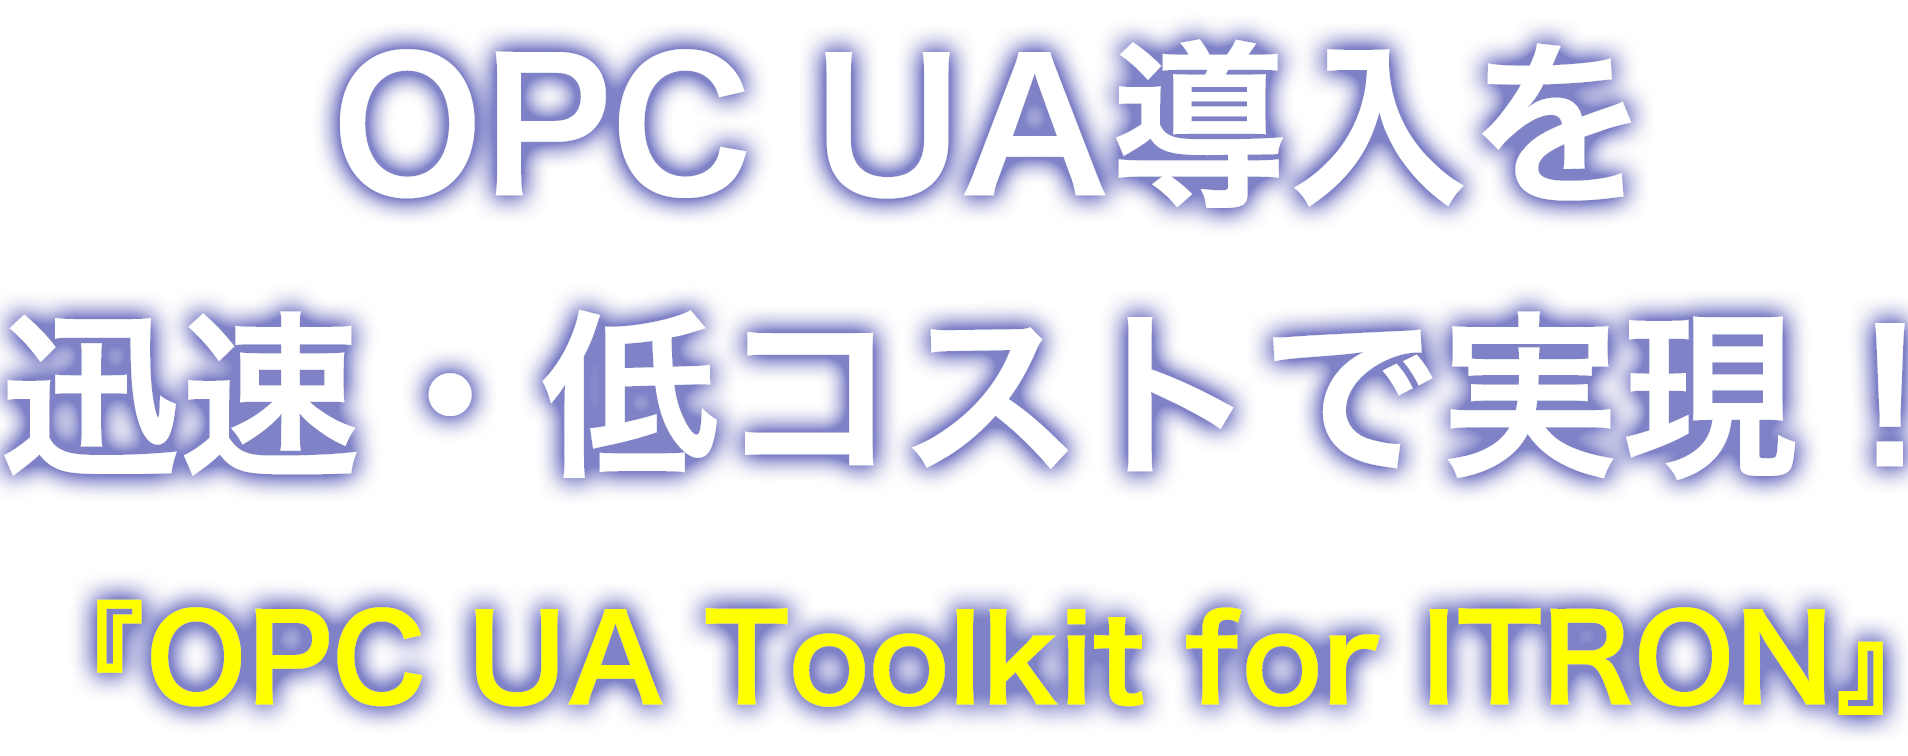 OPC UA導入を迅速・低コストで実現！ 『OPC UA Toolkit for ITRON』